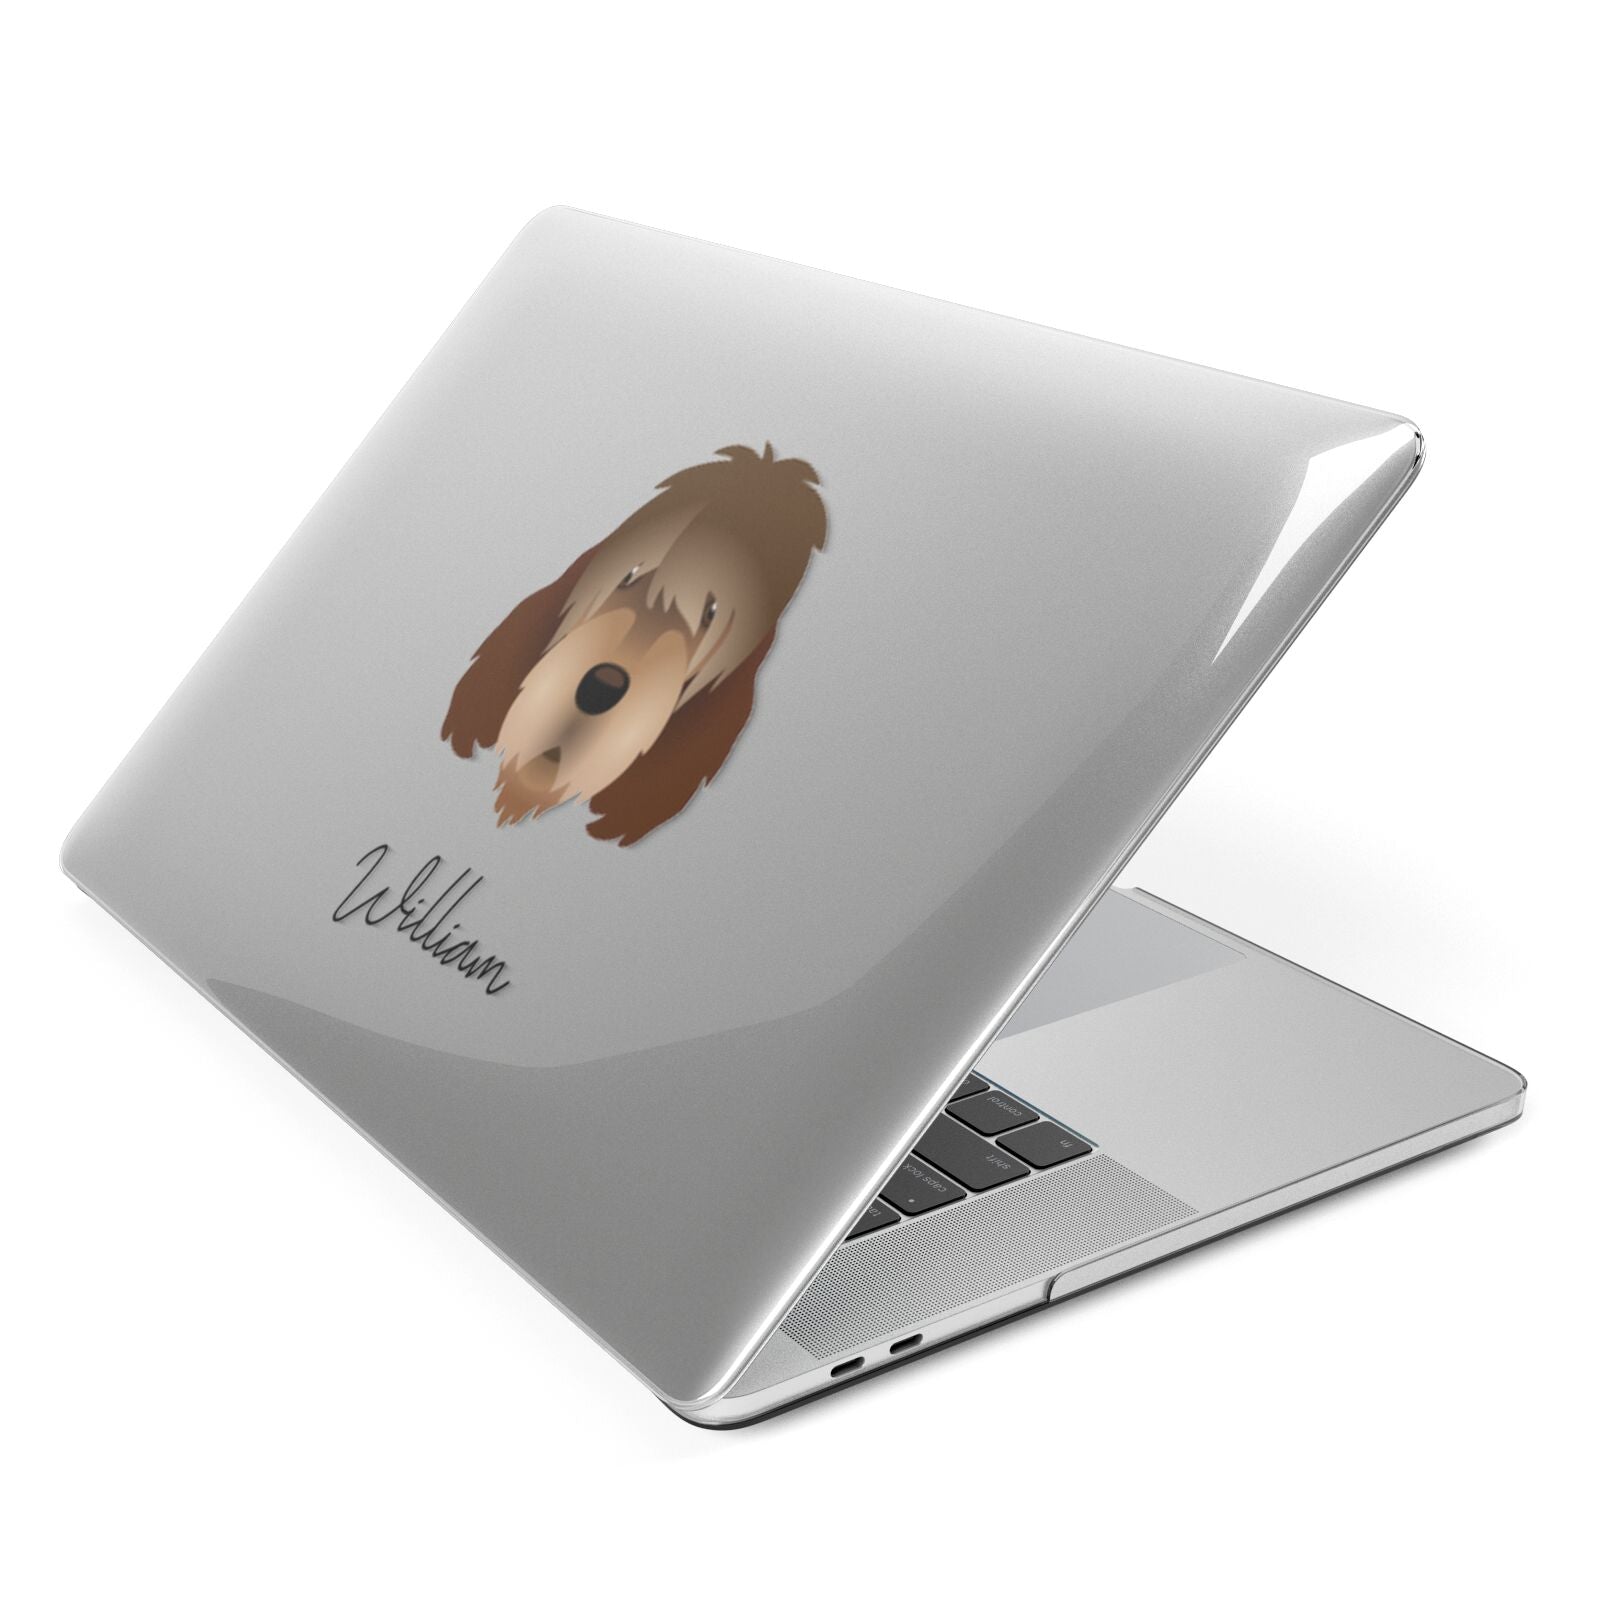 Otterhound Personalised Apple MacBook Case Side View